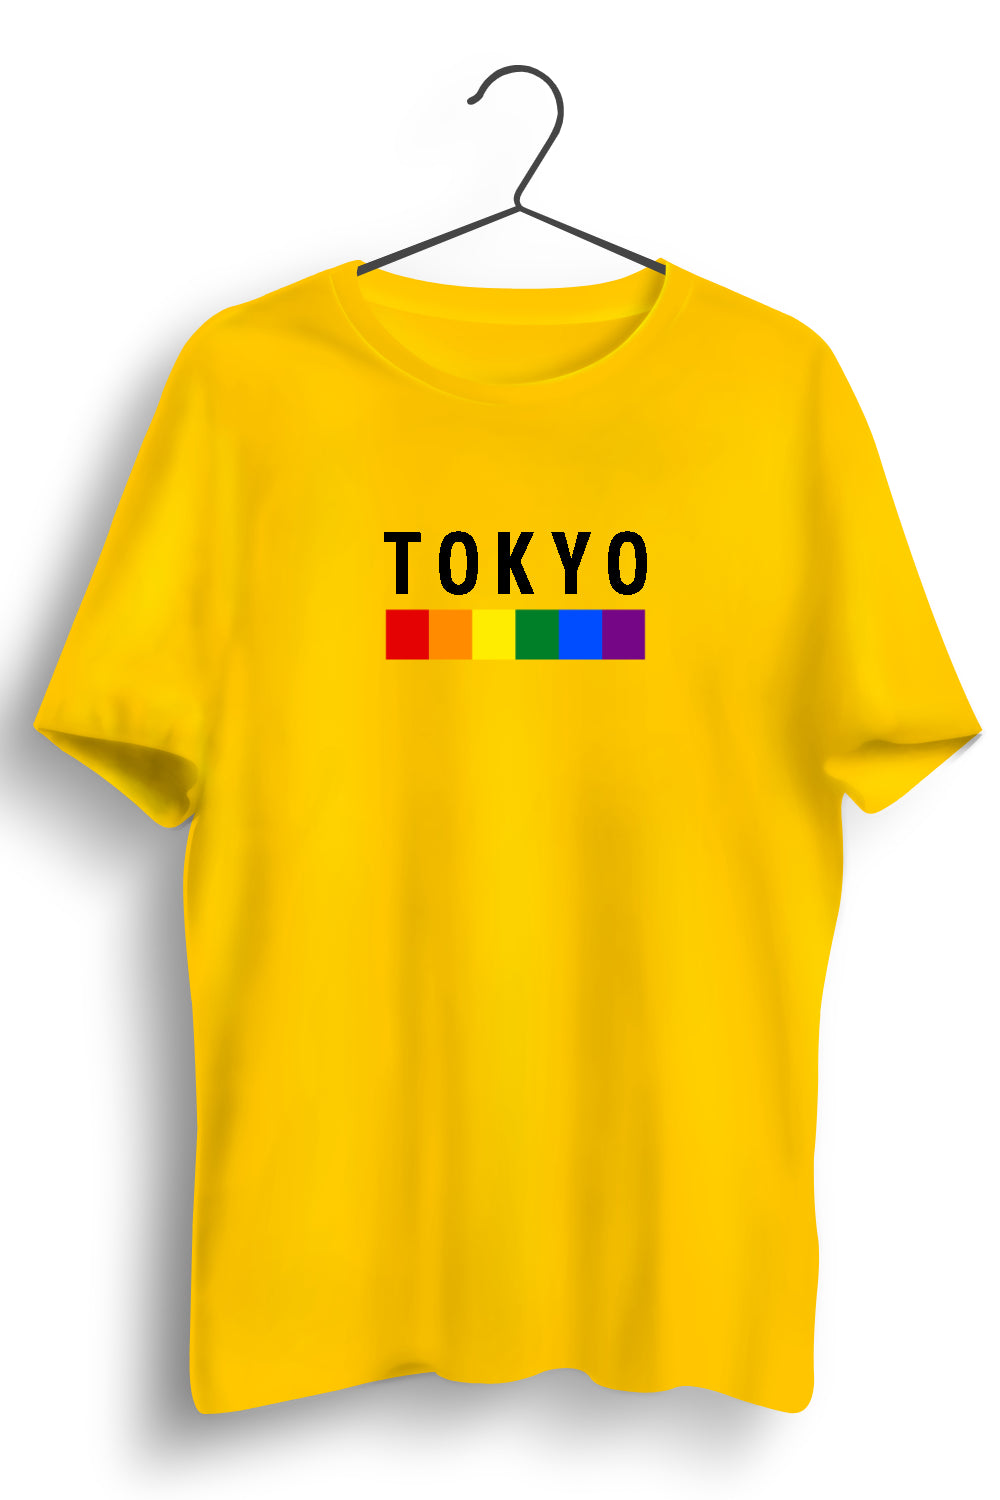 Tokyo Graphic Printed Yellow Tshirt